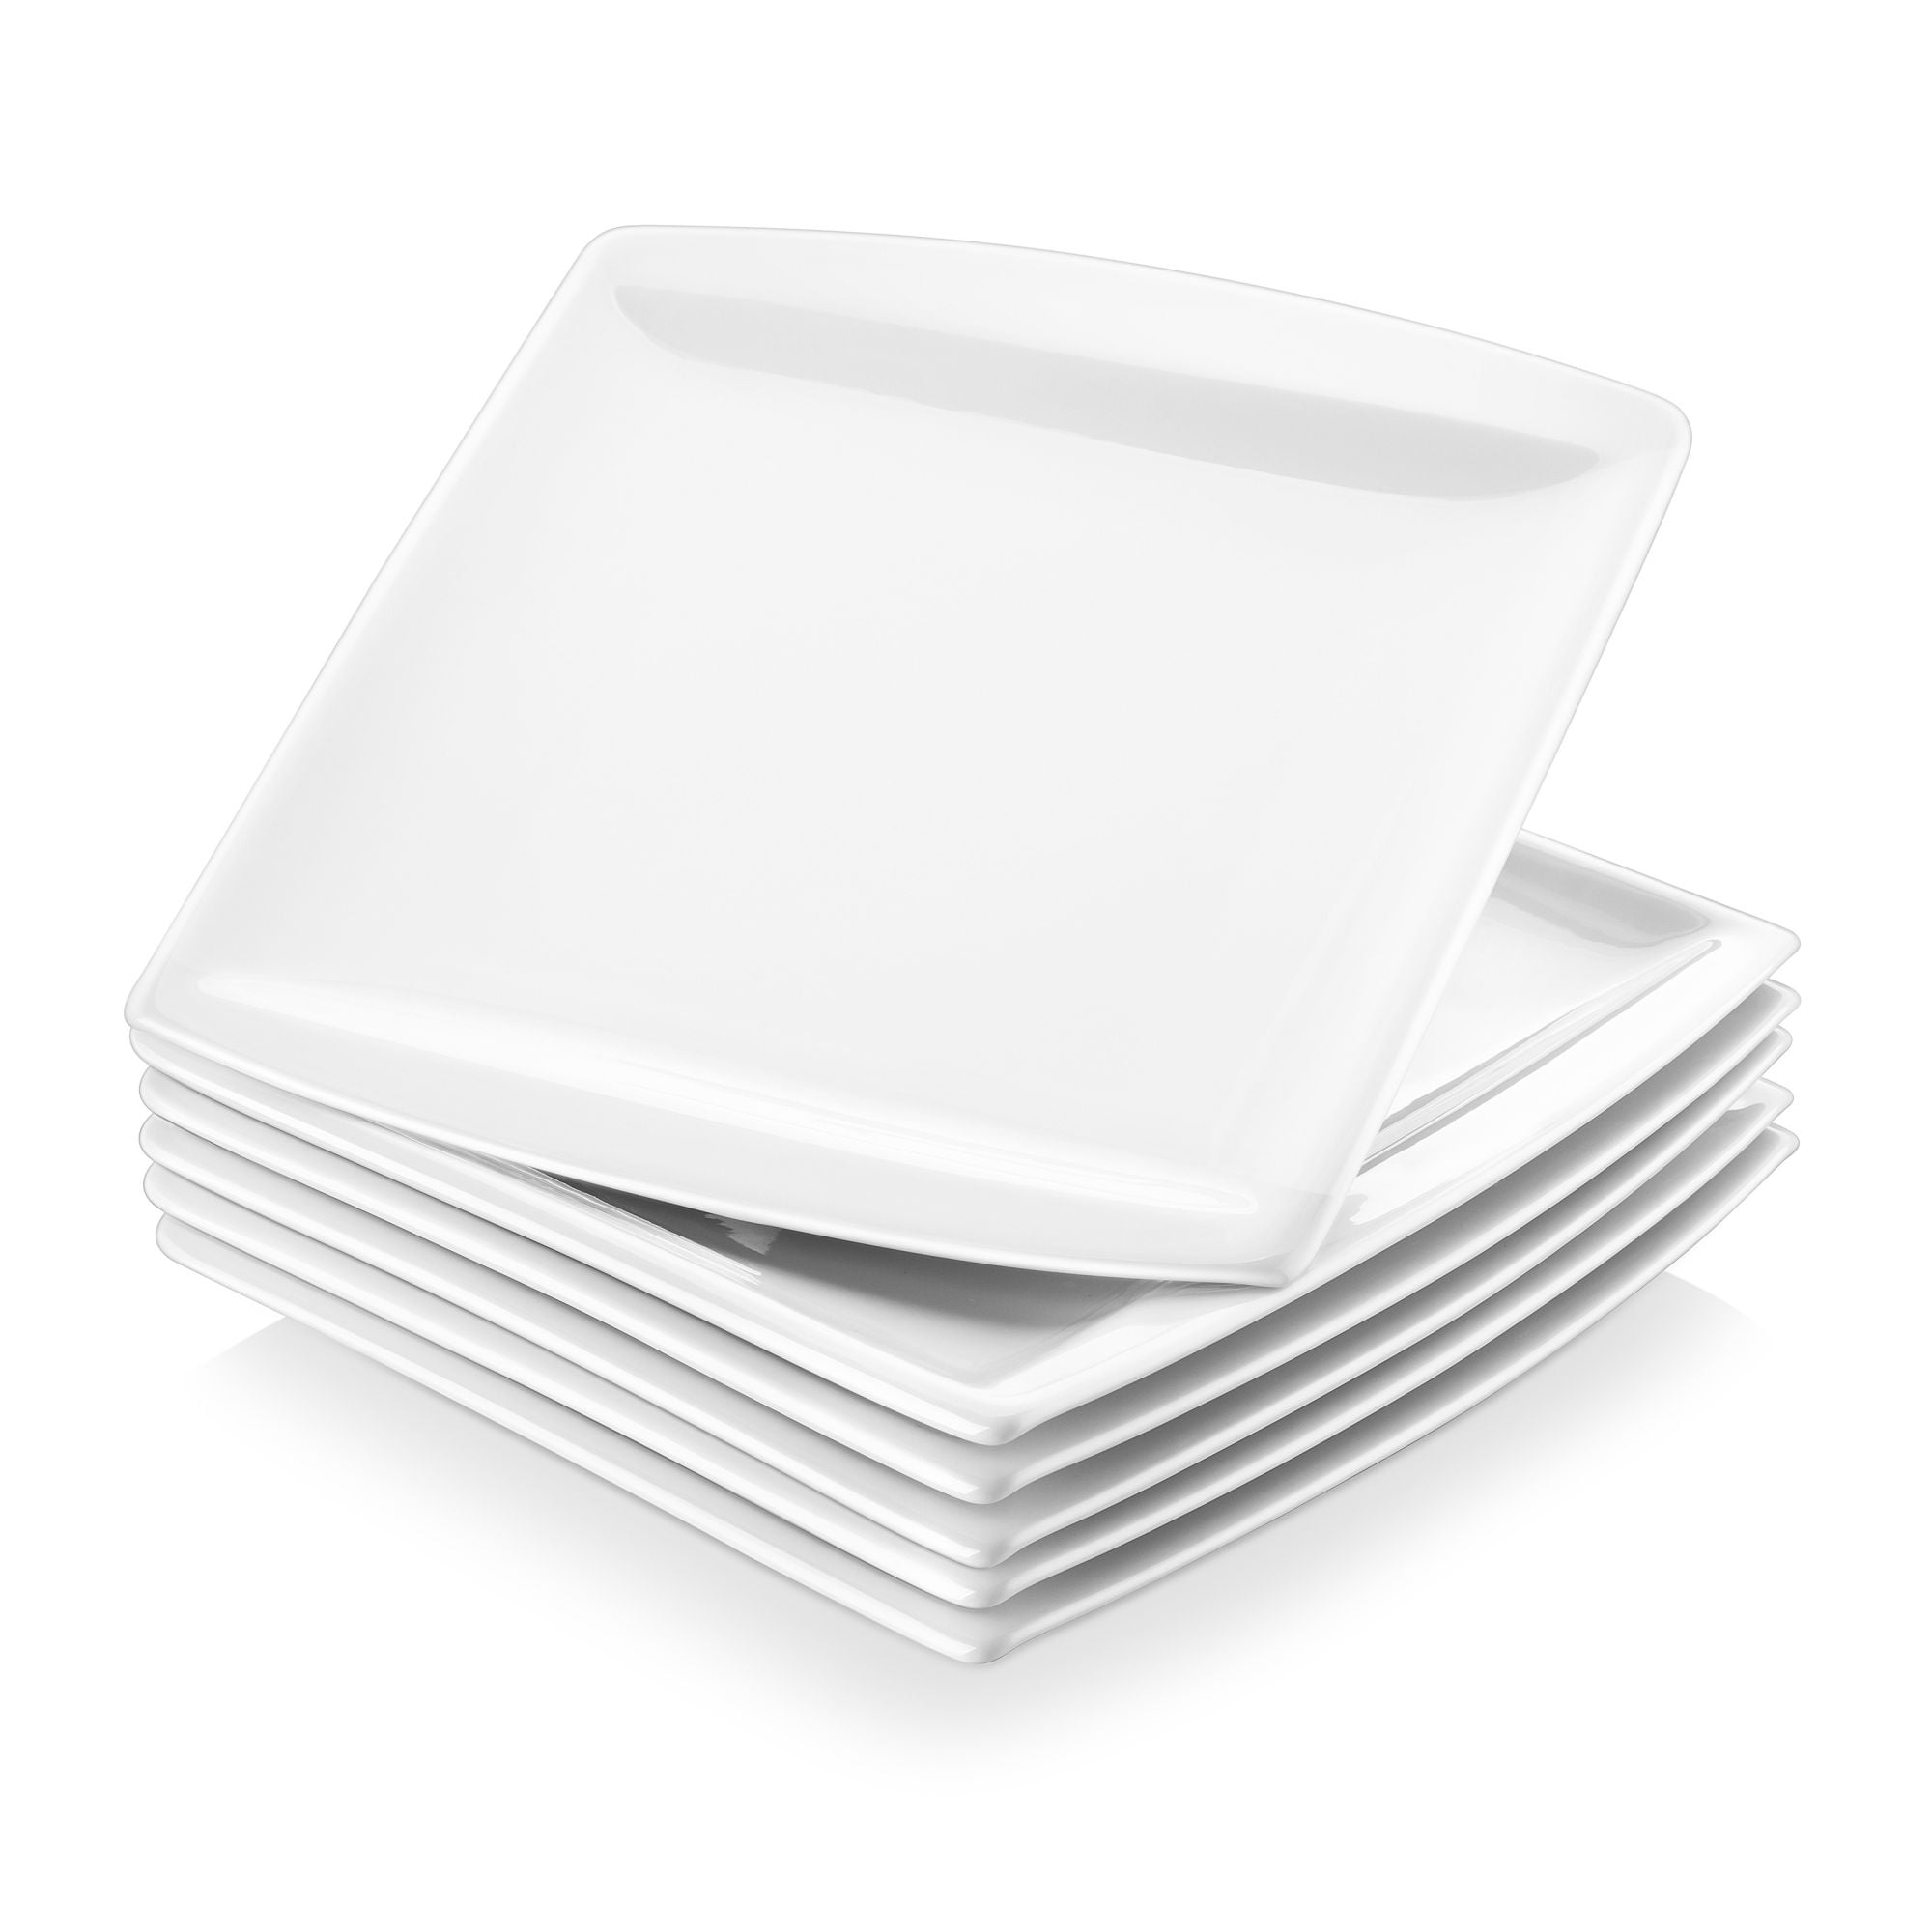 MALACASA Ivory White Dinner Plates, 8.2 Inch Ceramic Dinner  Plates Set of 6, Square Dinner Plate Kitchen Plates Dish Set, Porcelain  Plate, Microwave & Dishwasher Safe, Scratch Resistant, Series Flora